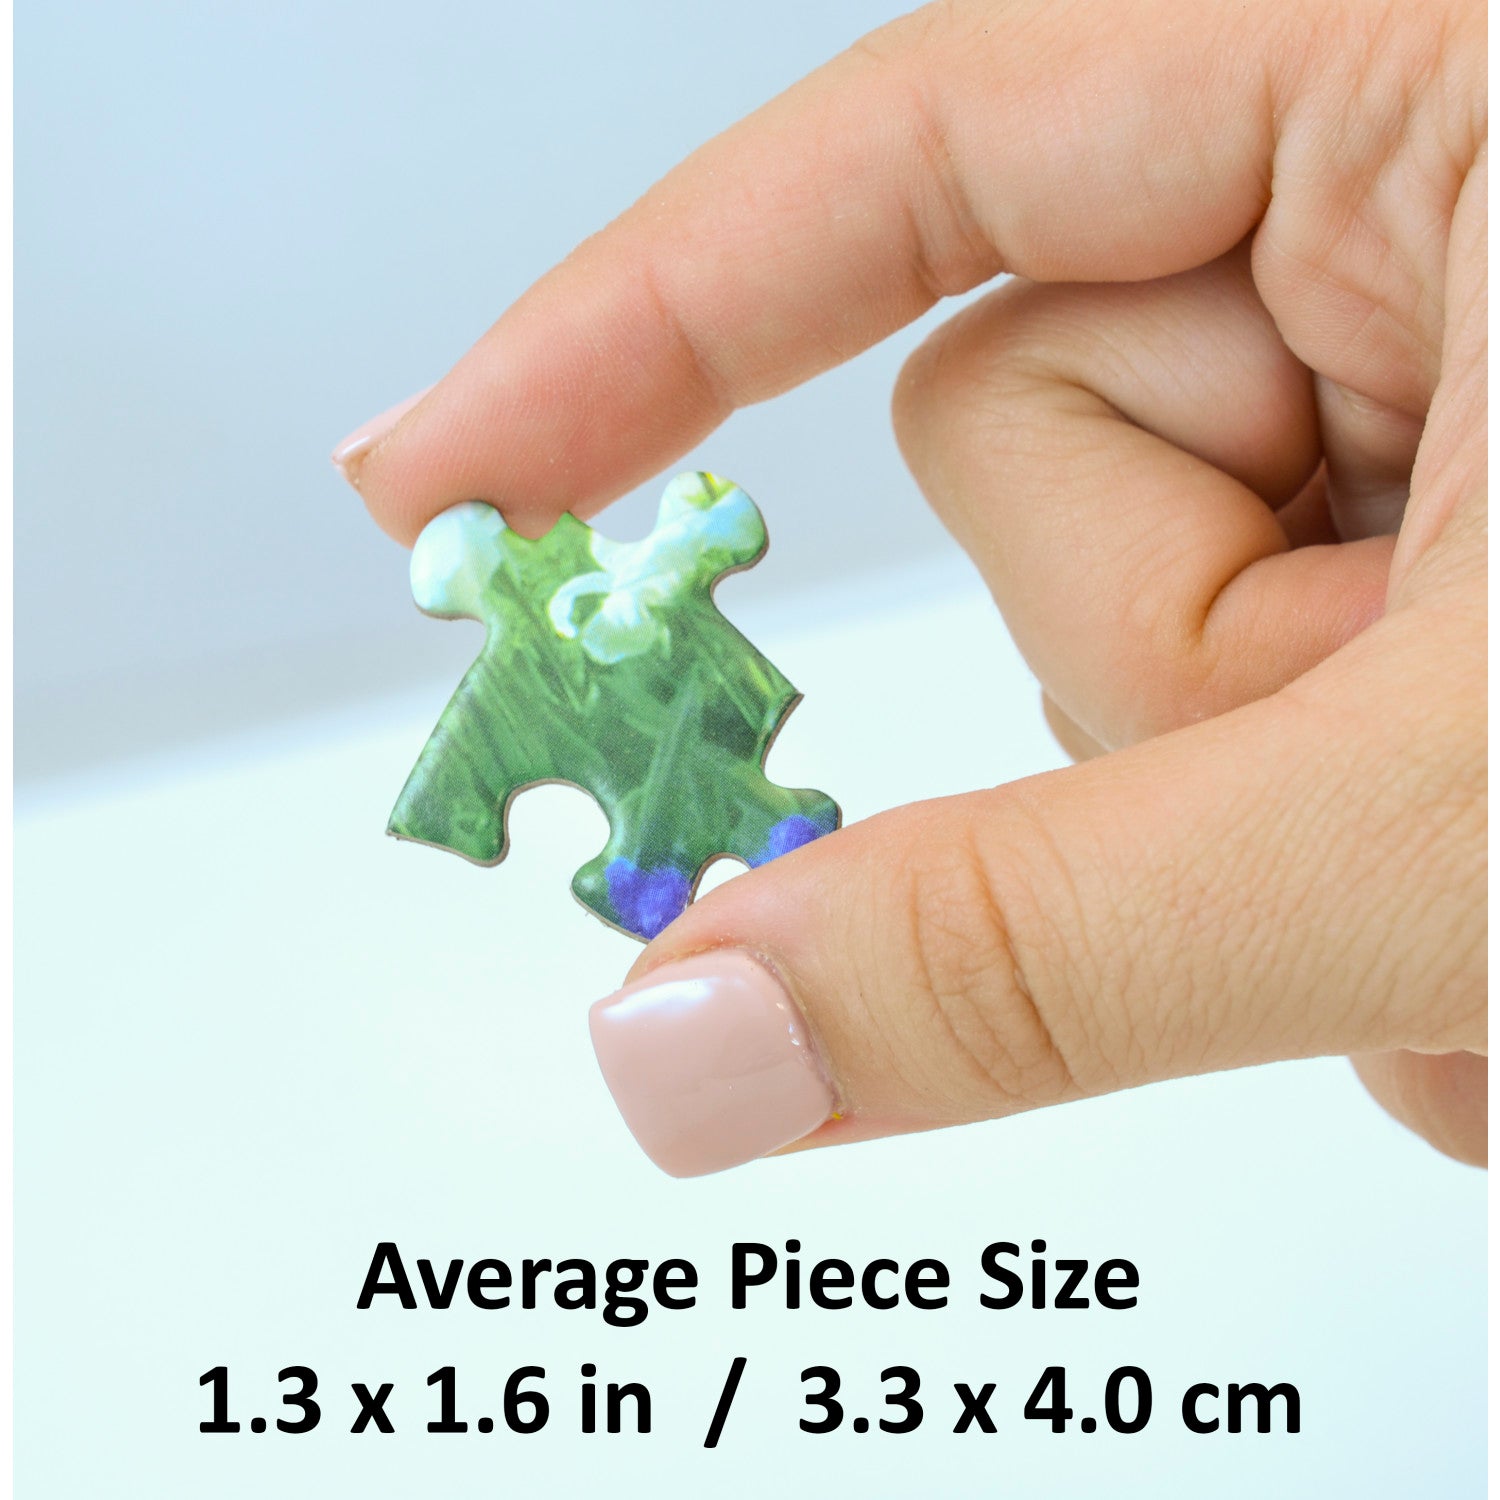 Brilliance - Iridescence 550 Piece Jigsaw Puzzle